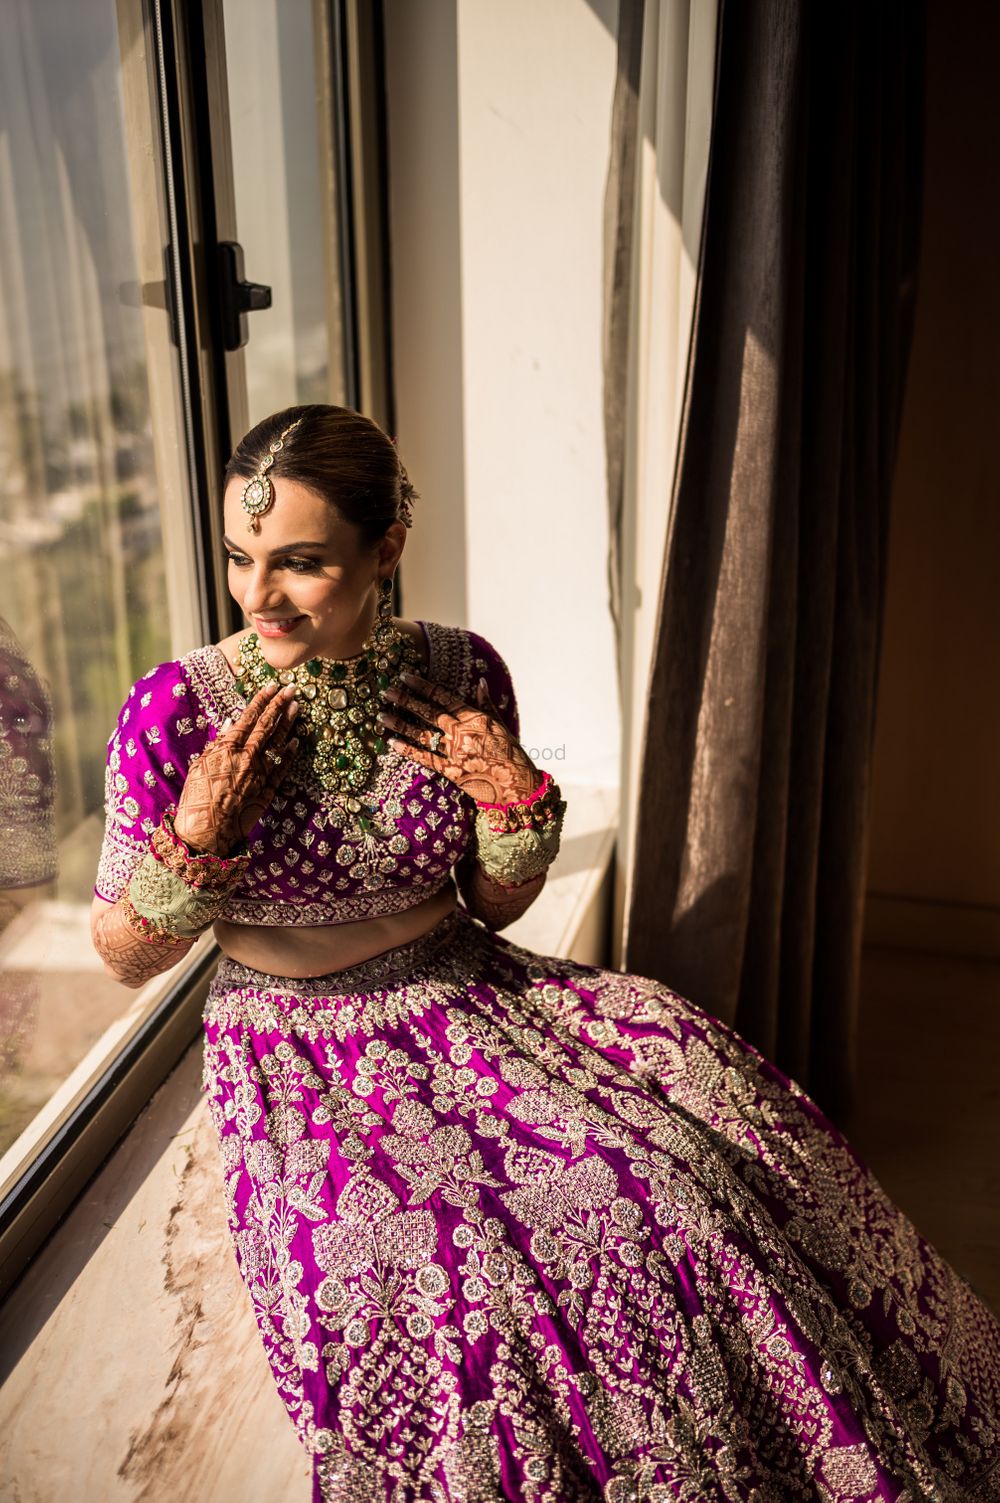 Photo of Bridal portrait wearing purple anita dongre lehenga